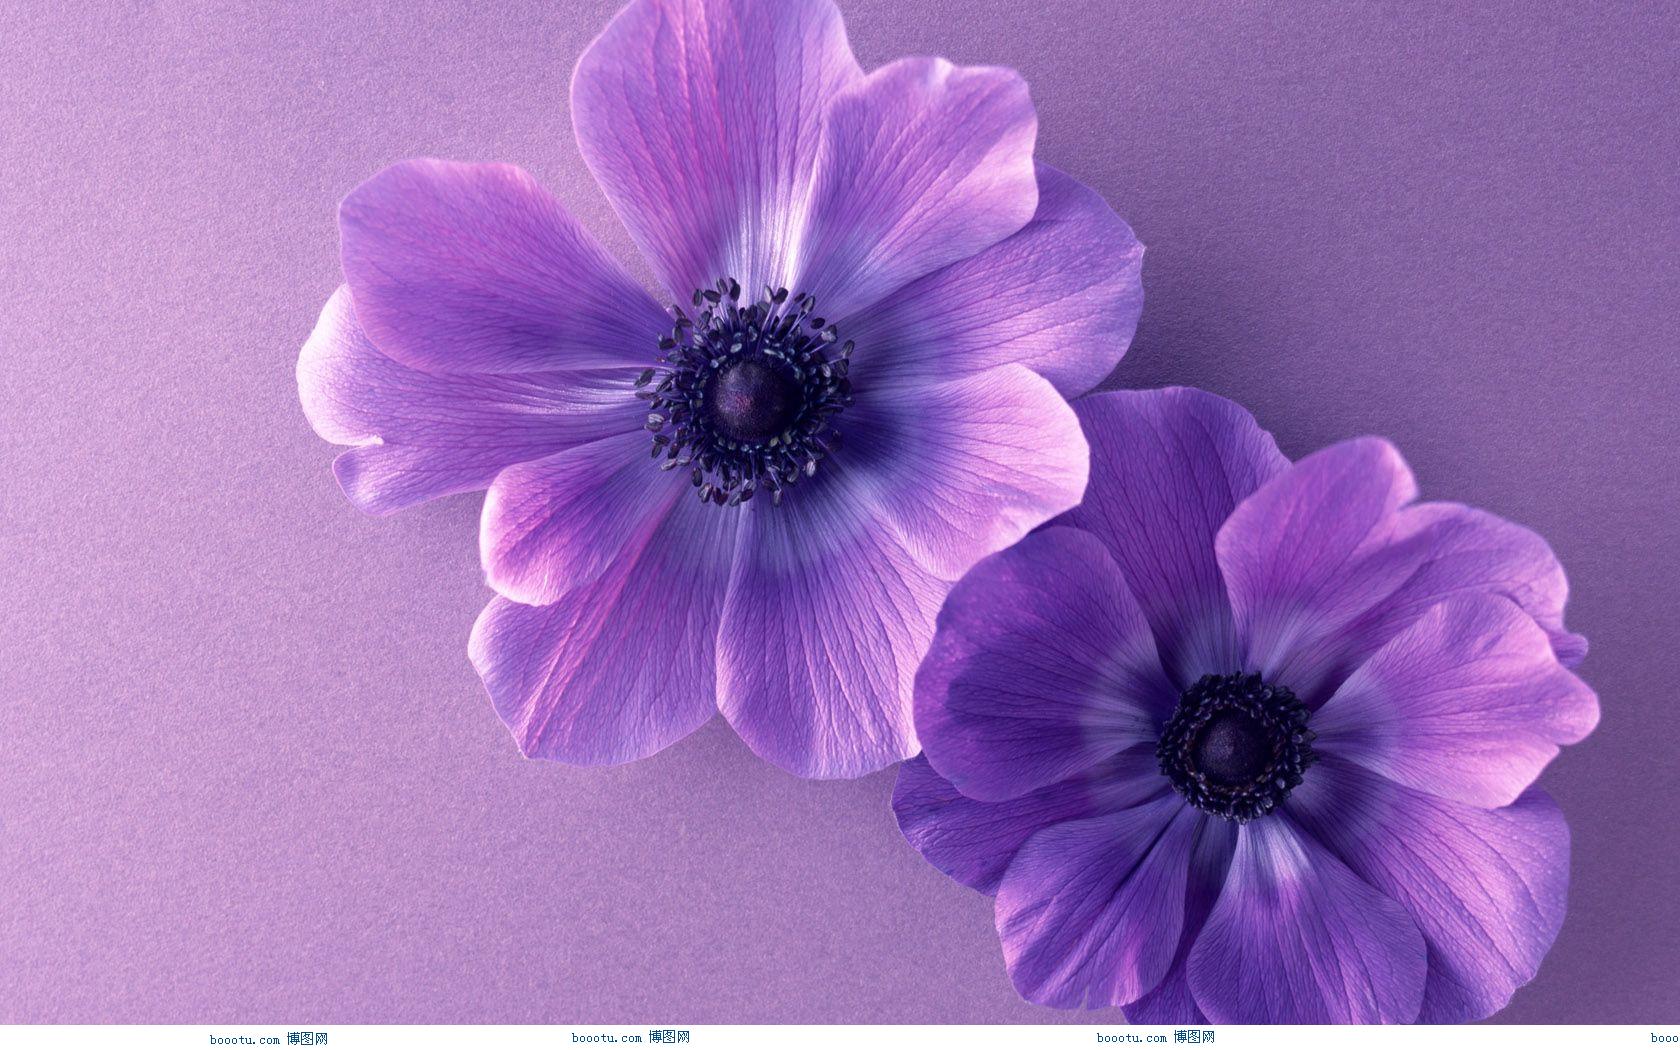 Scenery Gt Gorgeous Flower Wallpaper Purple Cute With